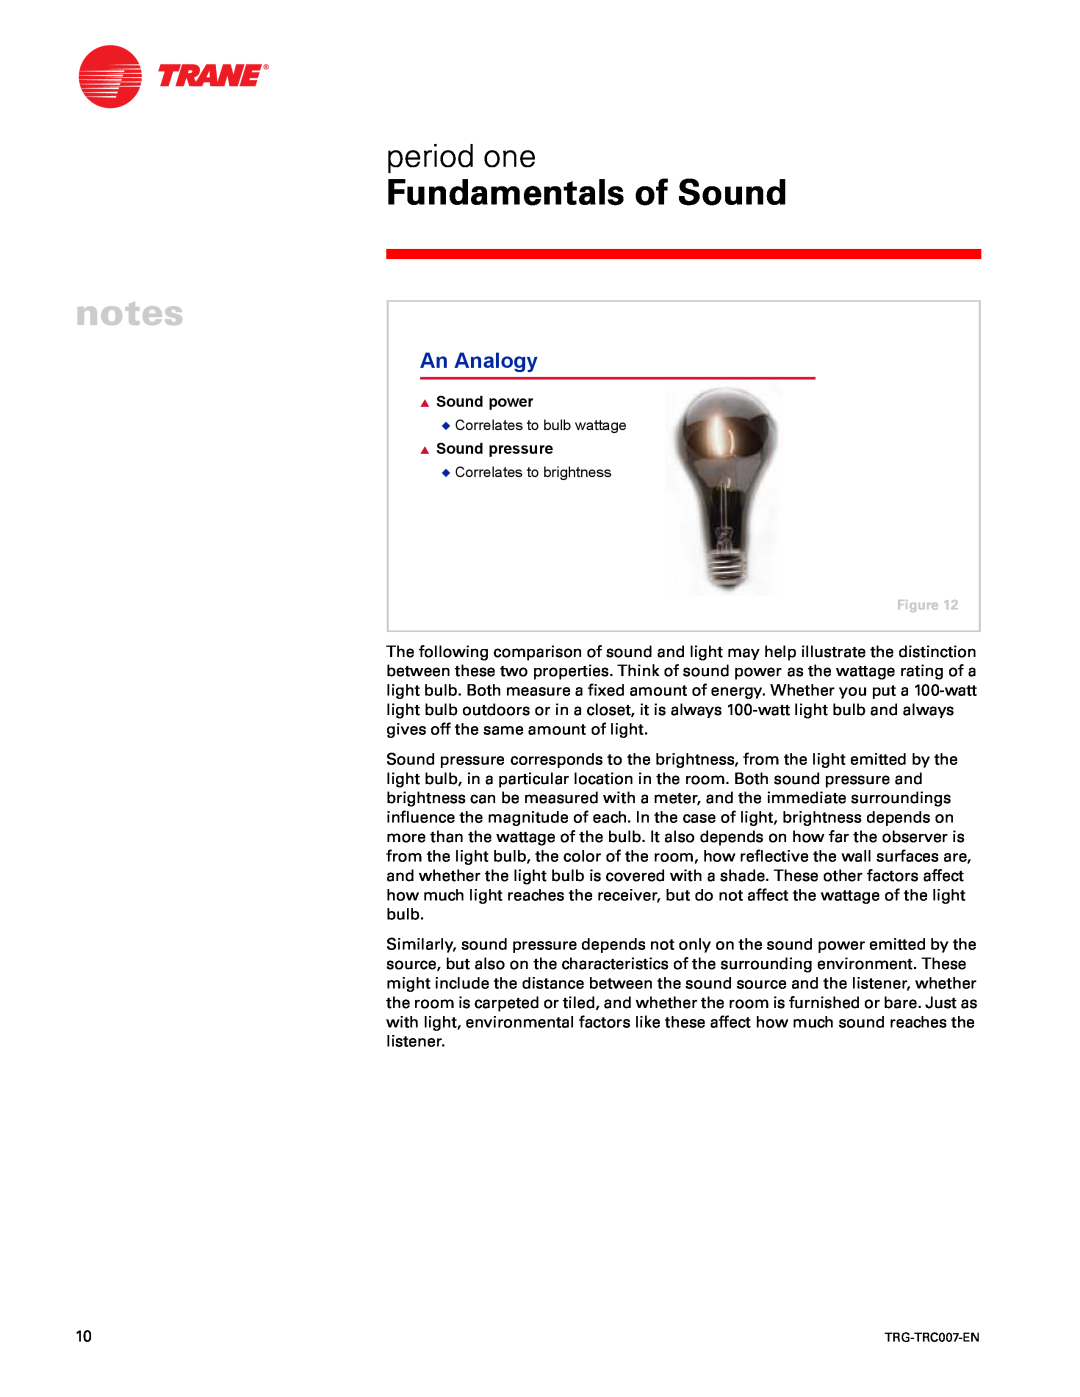 Trane TRG-TRC007-EN manual An Analogy, Fundamentals of Sound, period one, K Correlates to bulb wattage 